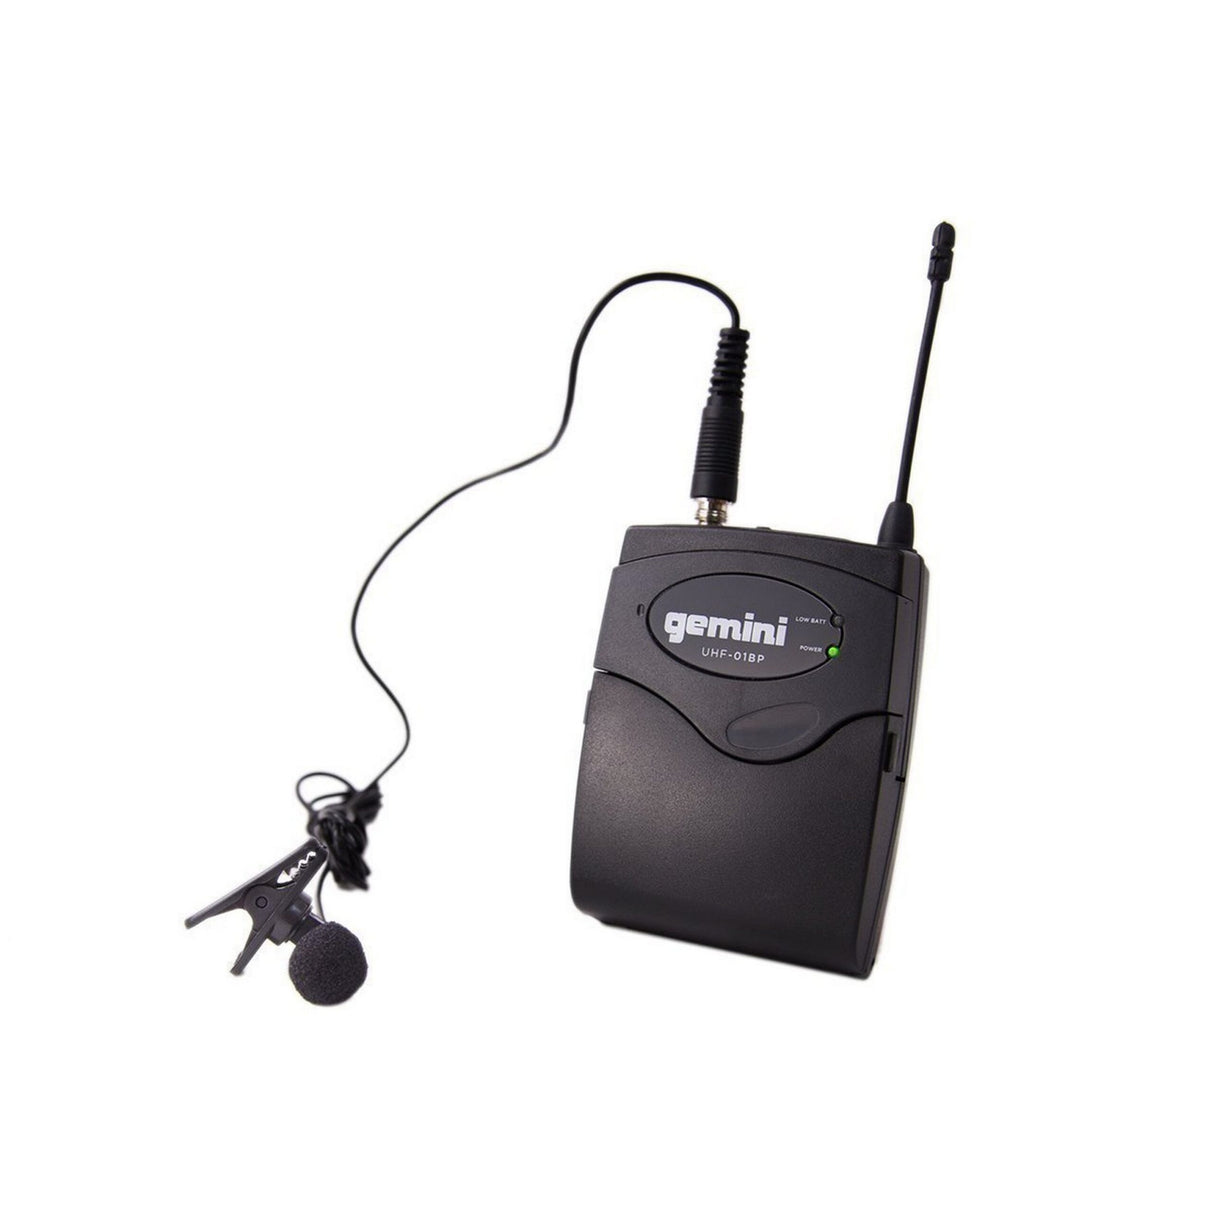 Gemini UHF-01HL Headset Lavalier Wireless Microphone System, F2 Band